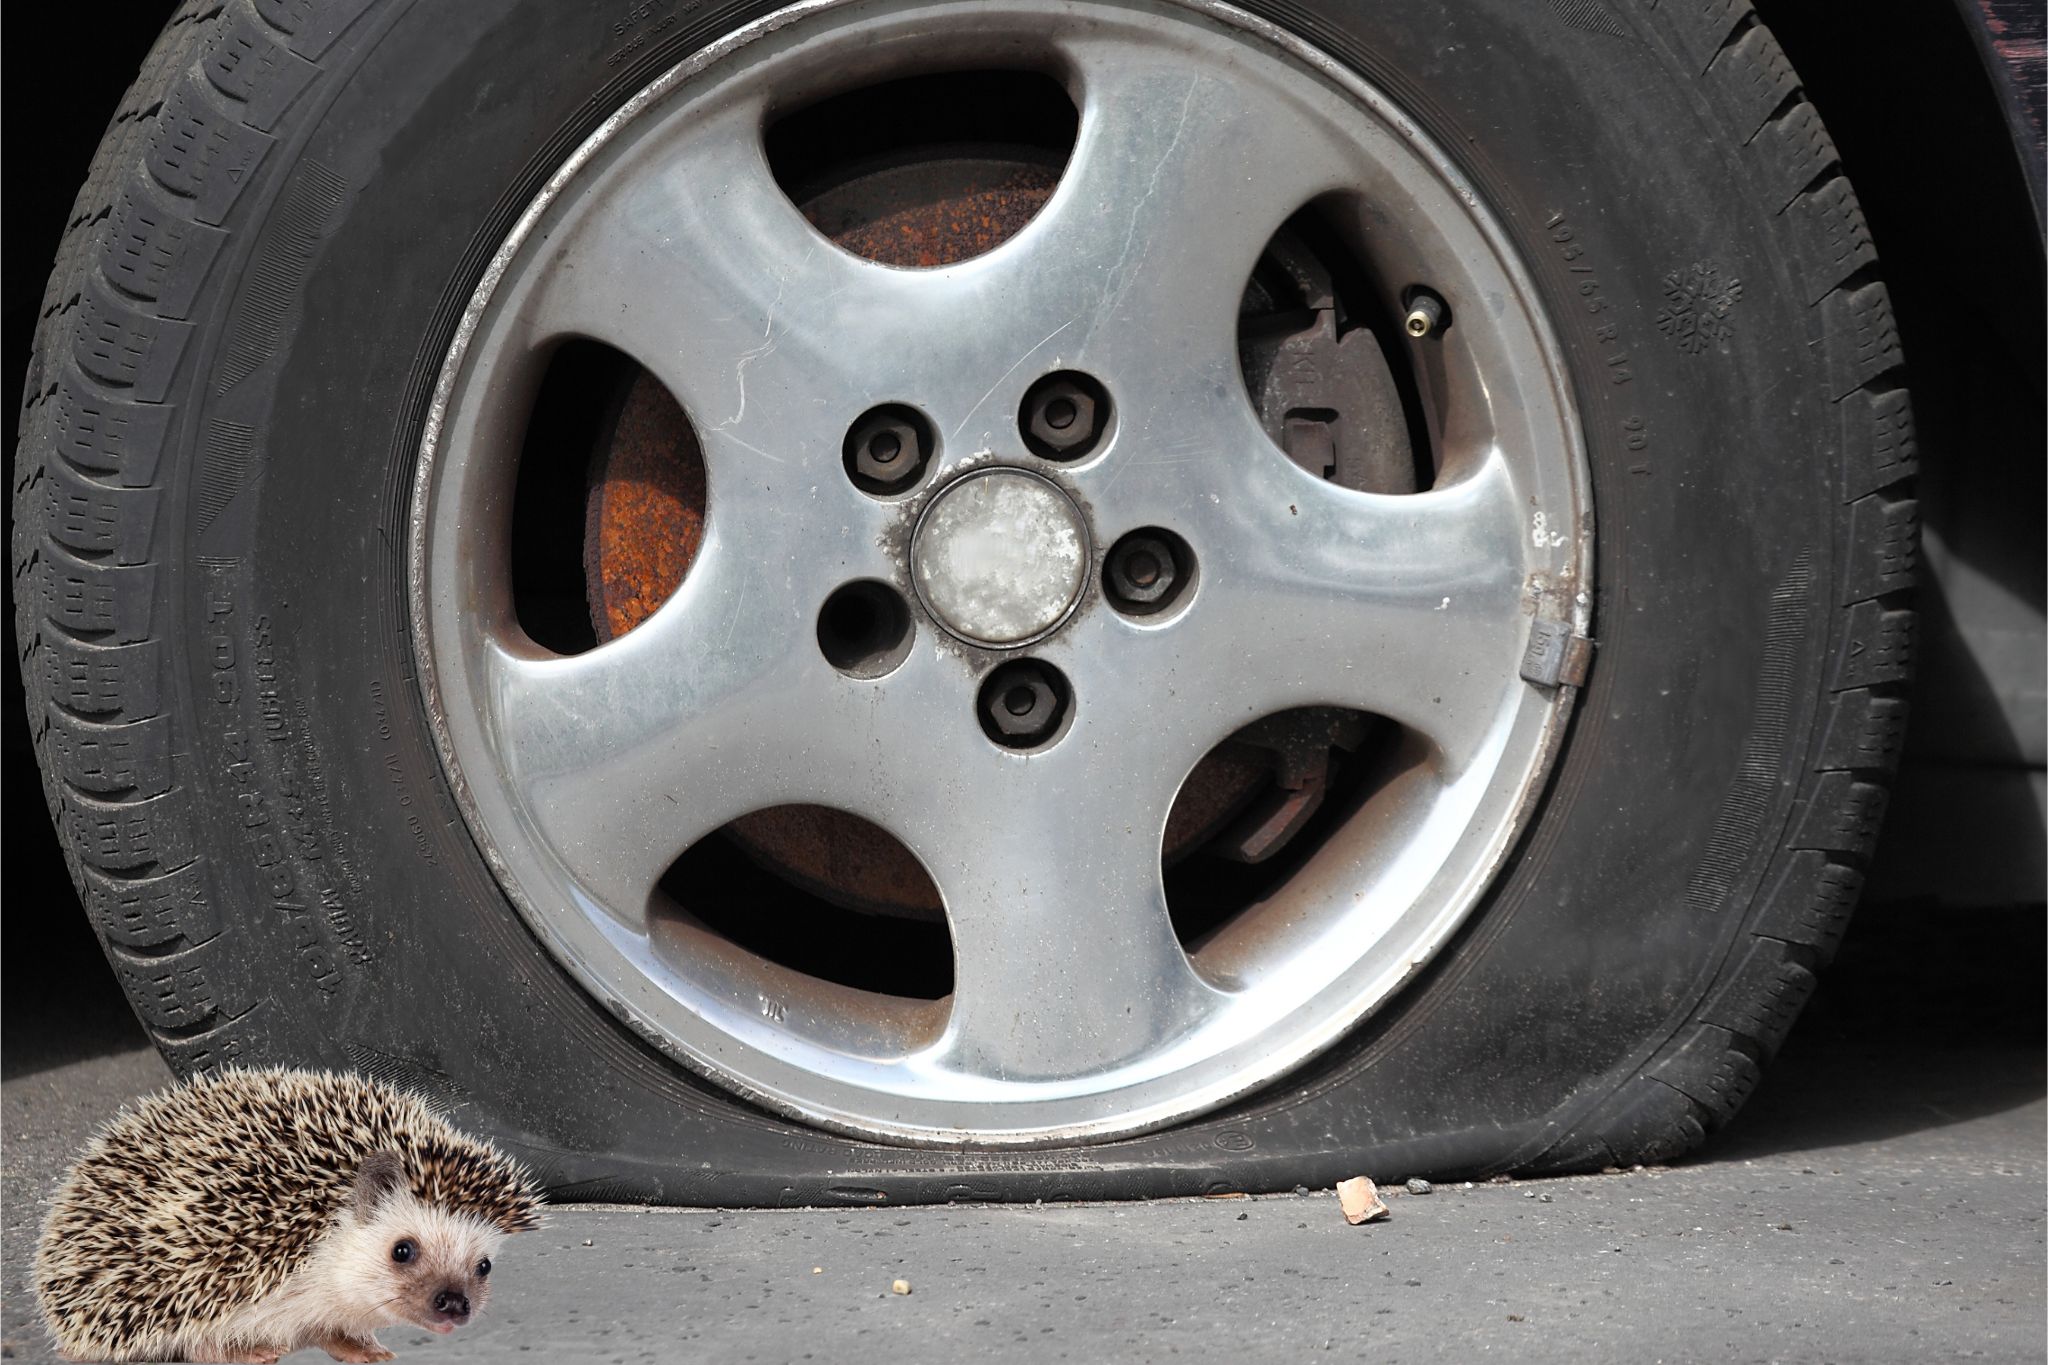 Can a Hedgehog Burst a Car Tire